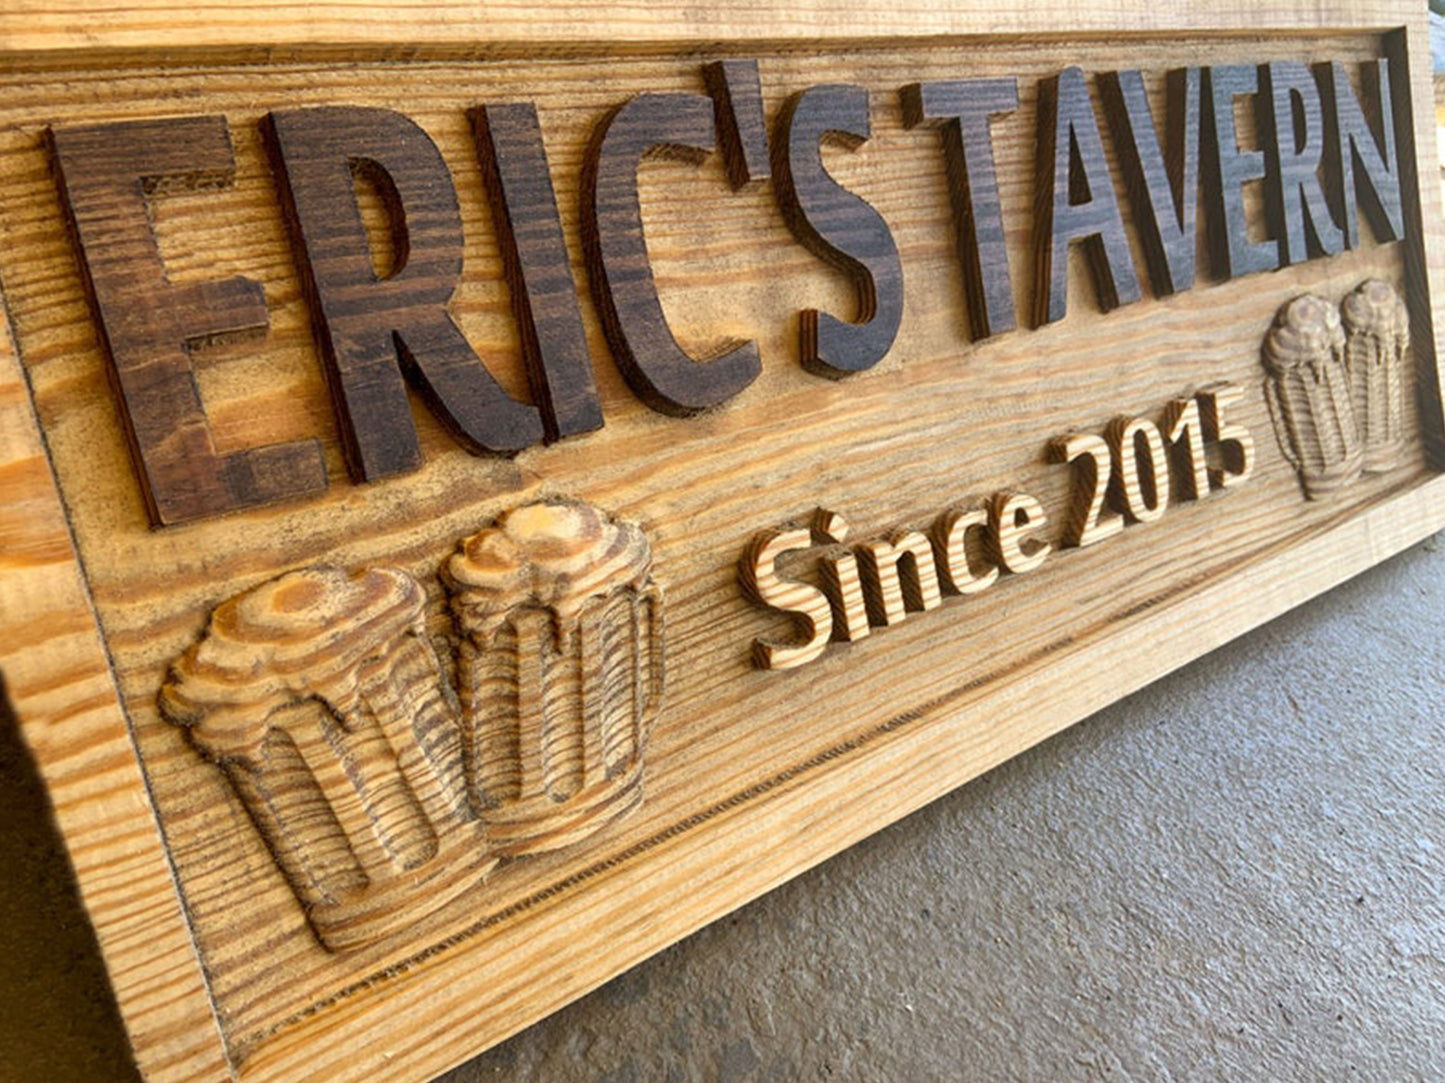 Eric's Tavern And Mug Design Since 2015